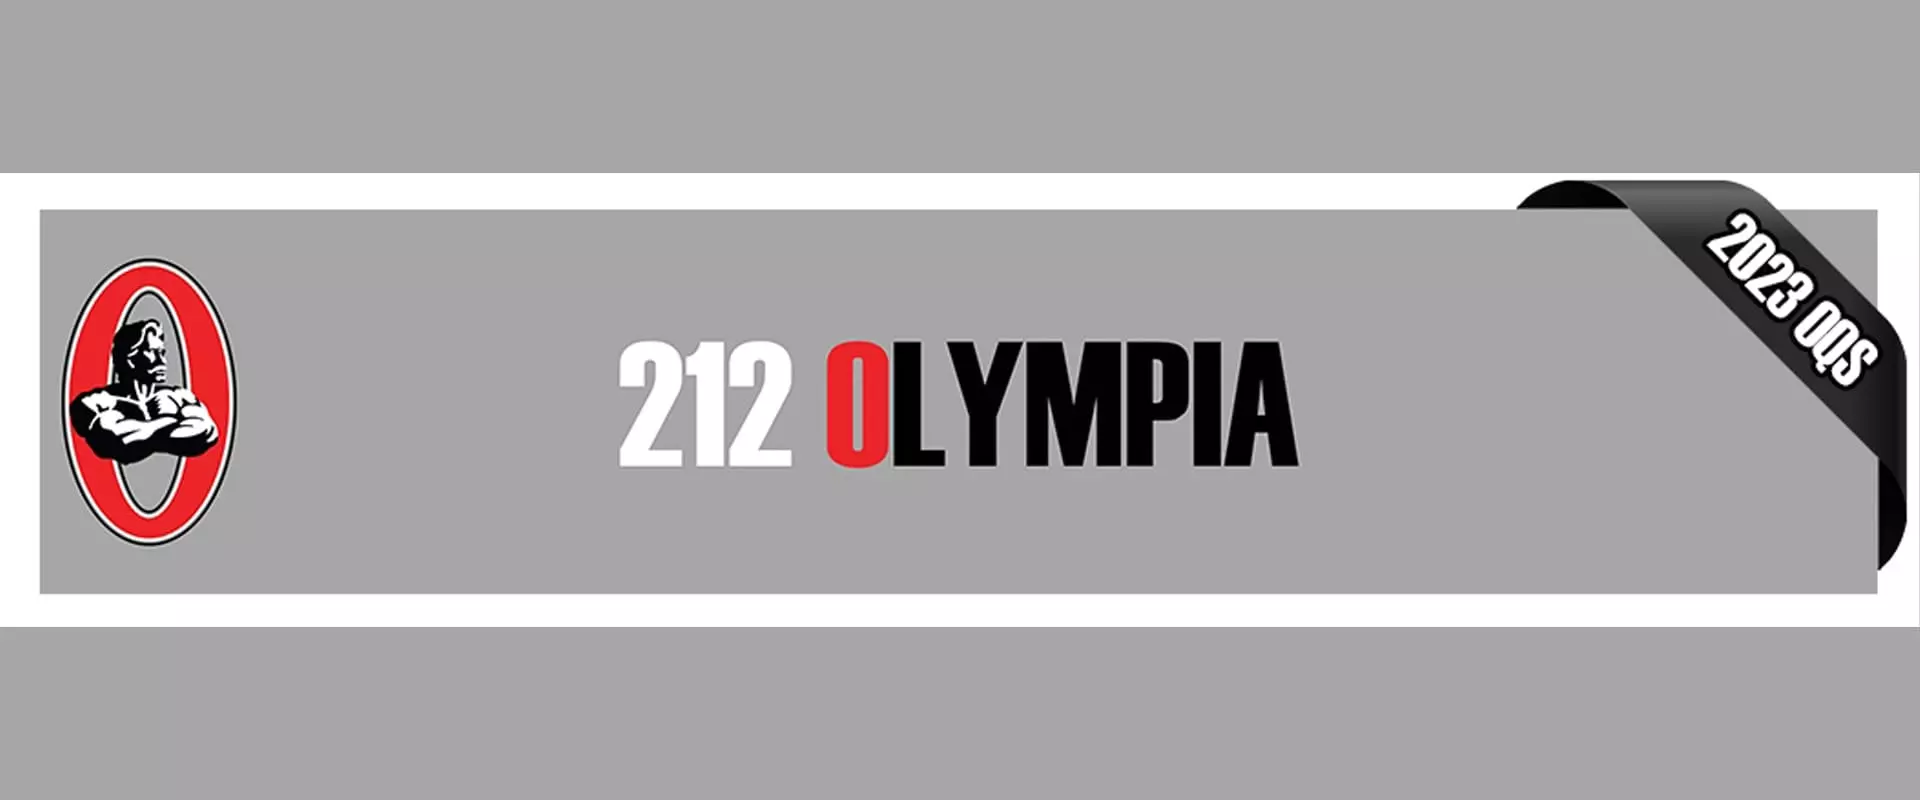 Olympia 2023 – Catégorie 212 Bodybuilding